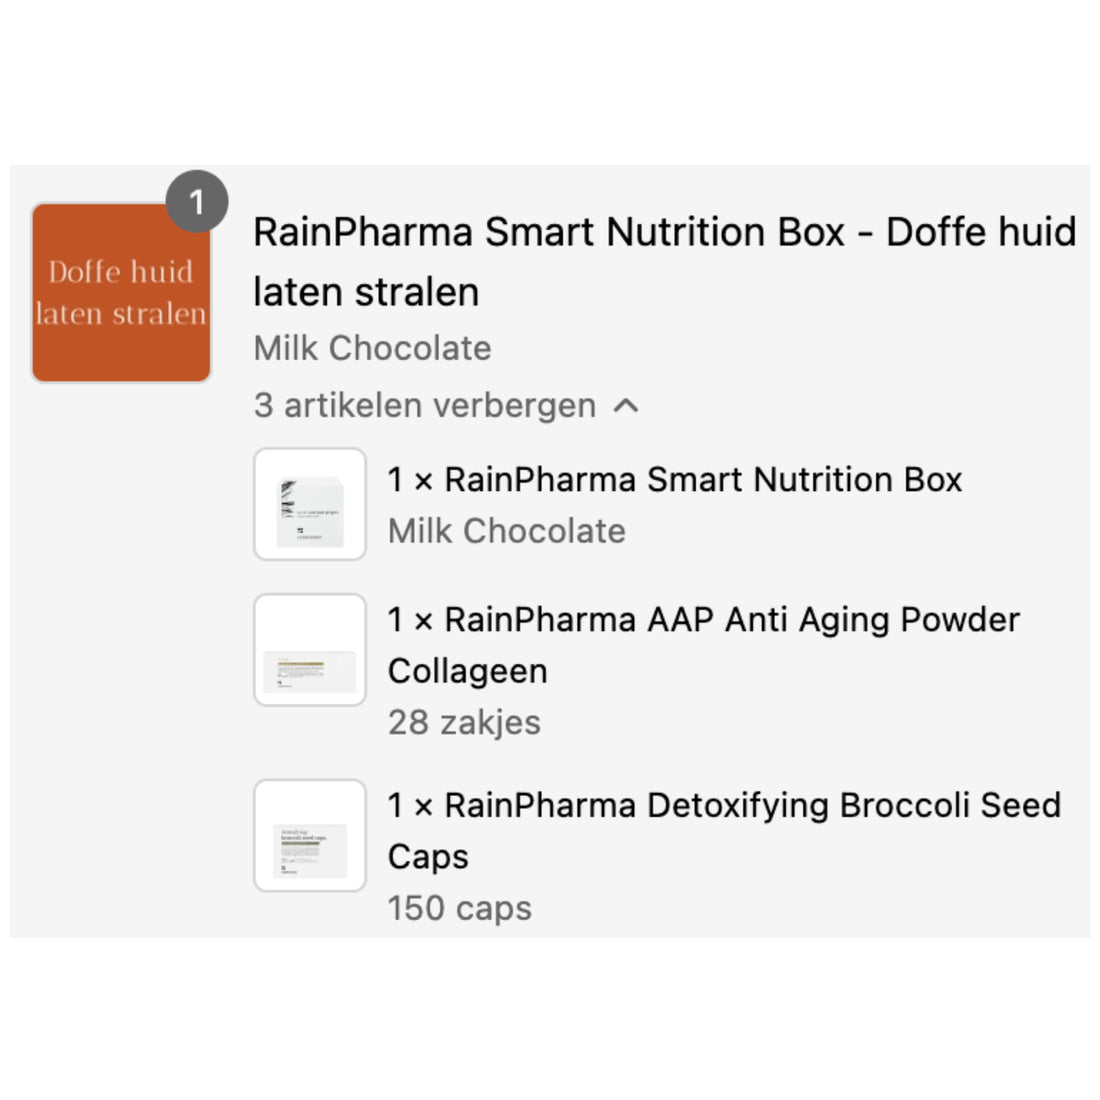 RainPharma Smart Nutrition Box - Doffe huid laten stralen